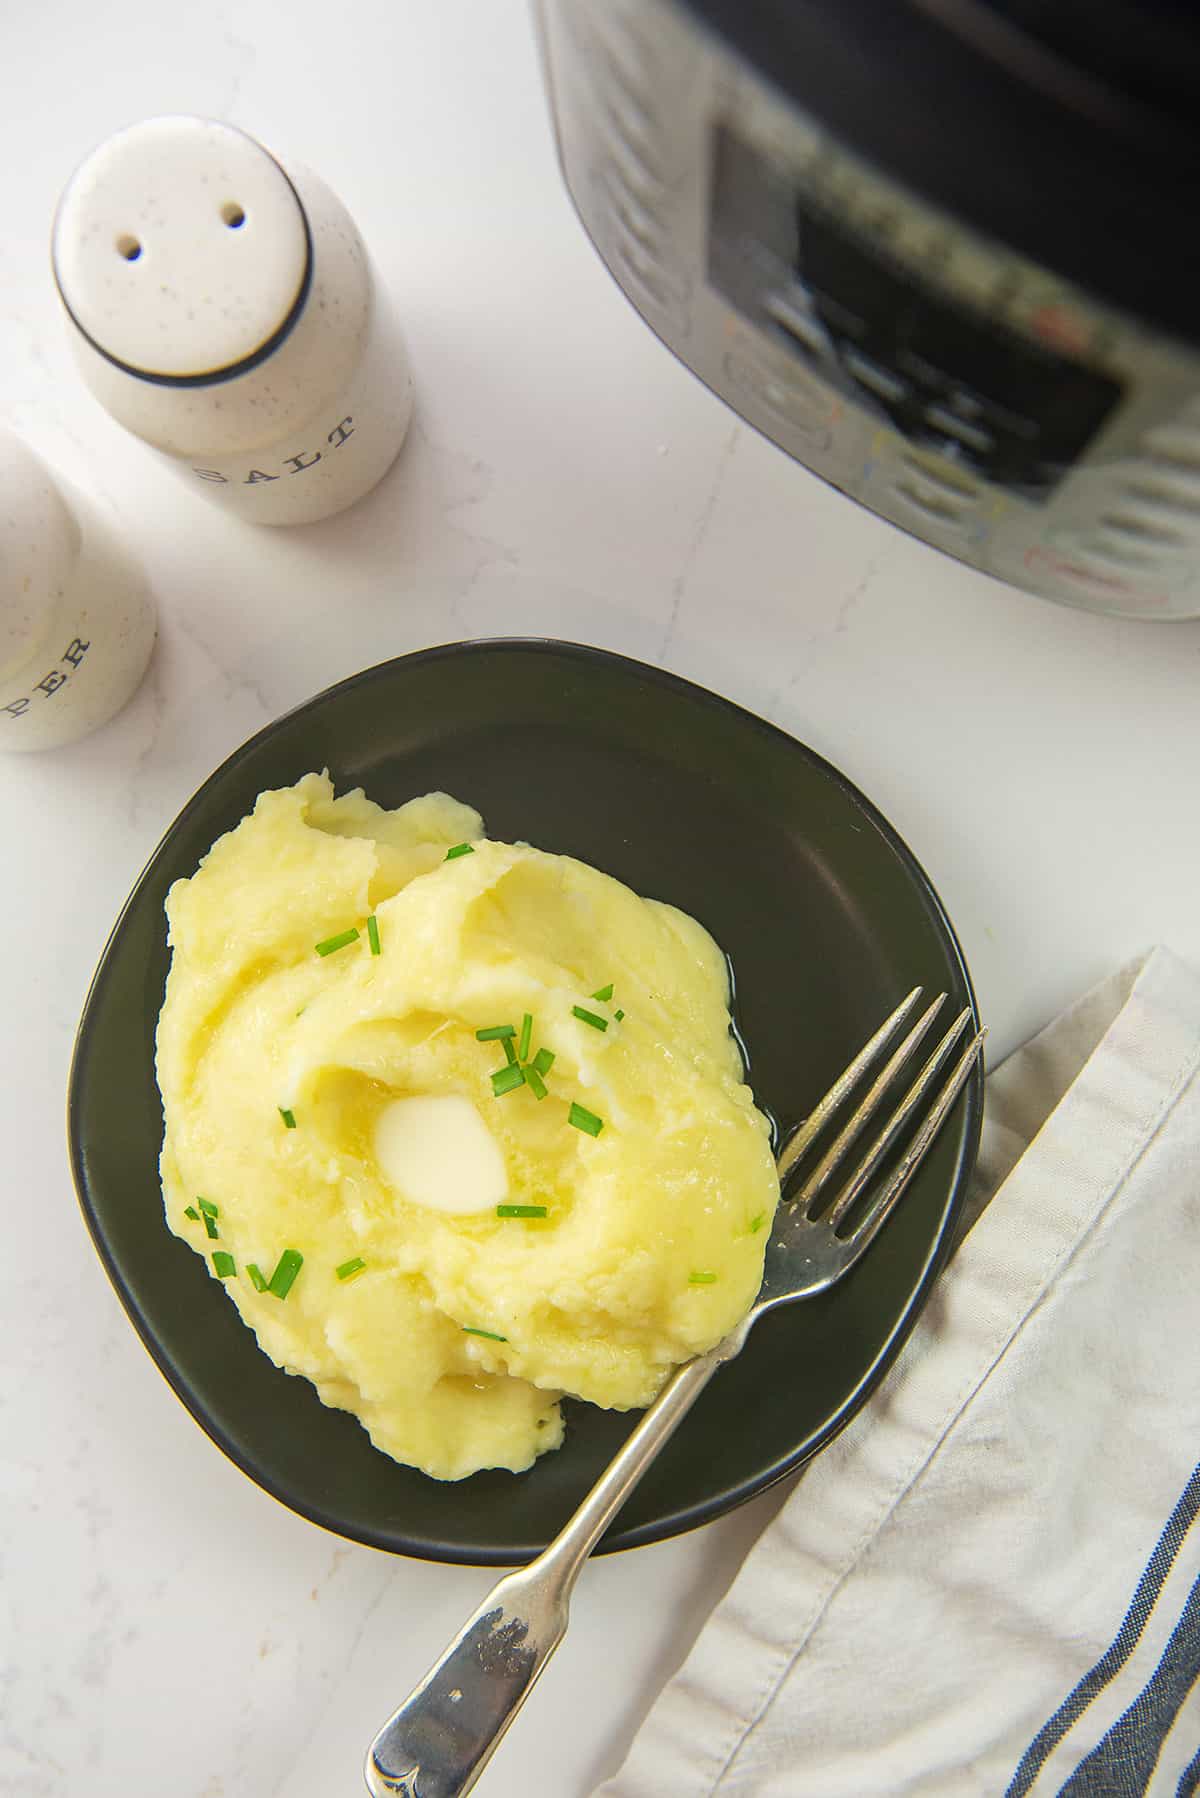 mashed potatoes on black plate.